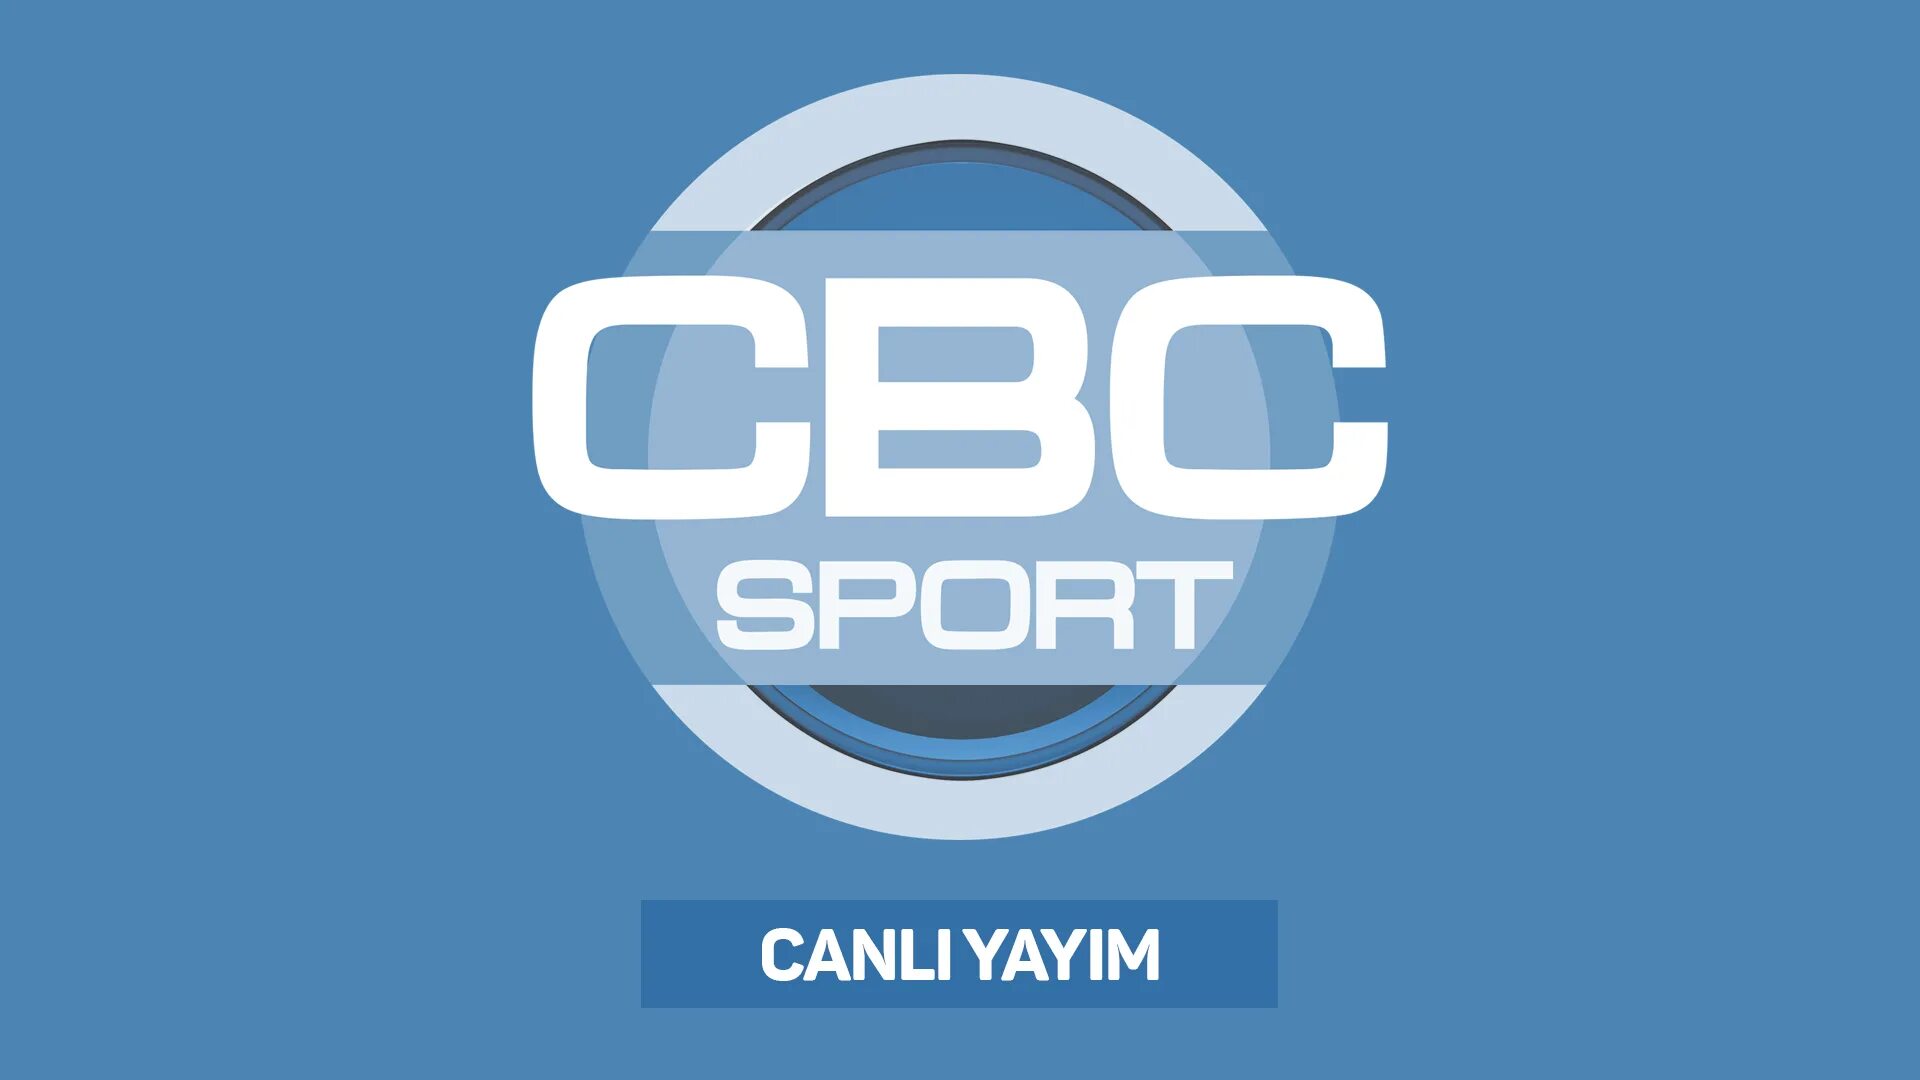 Cbc sport azerbaycan kesintisiz canli. CBC Sport. Телеканал CBC. Канал CBC Sport. CBC Sport logo.